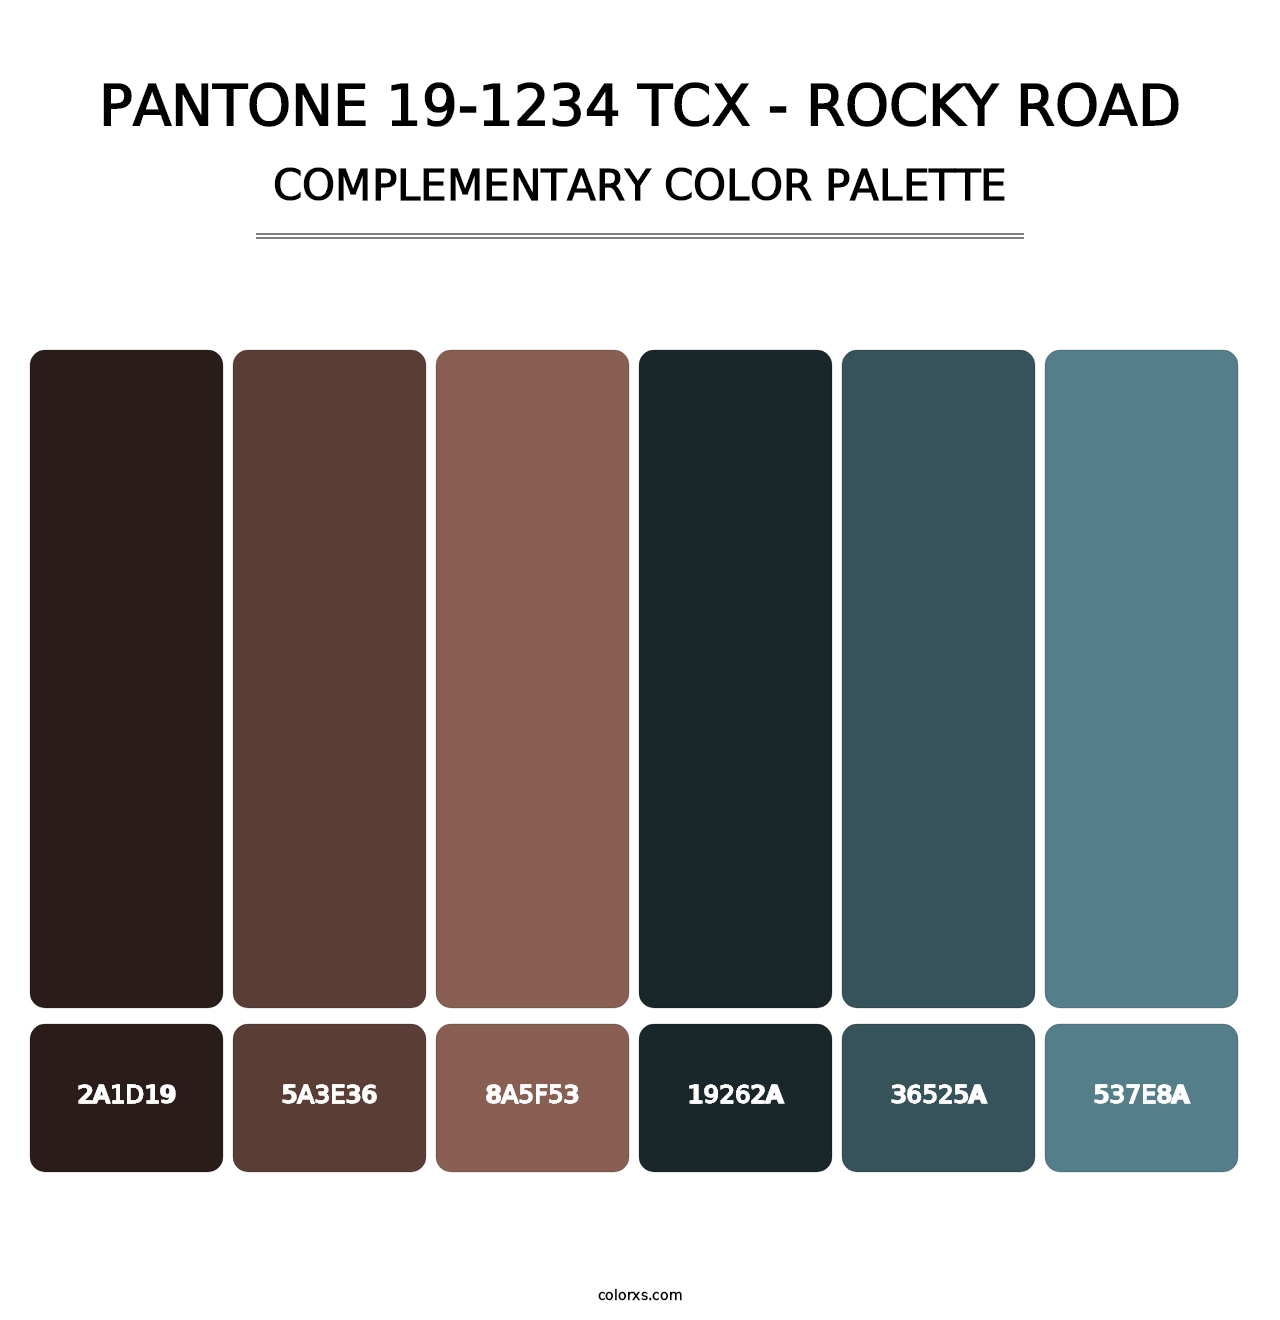 PANTONE 19-1234 TCX - Rocky Road - Complementary Color Palette